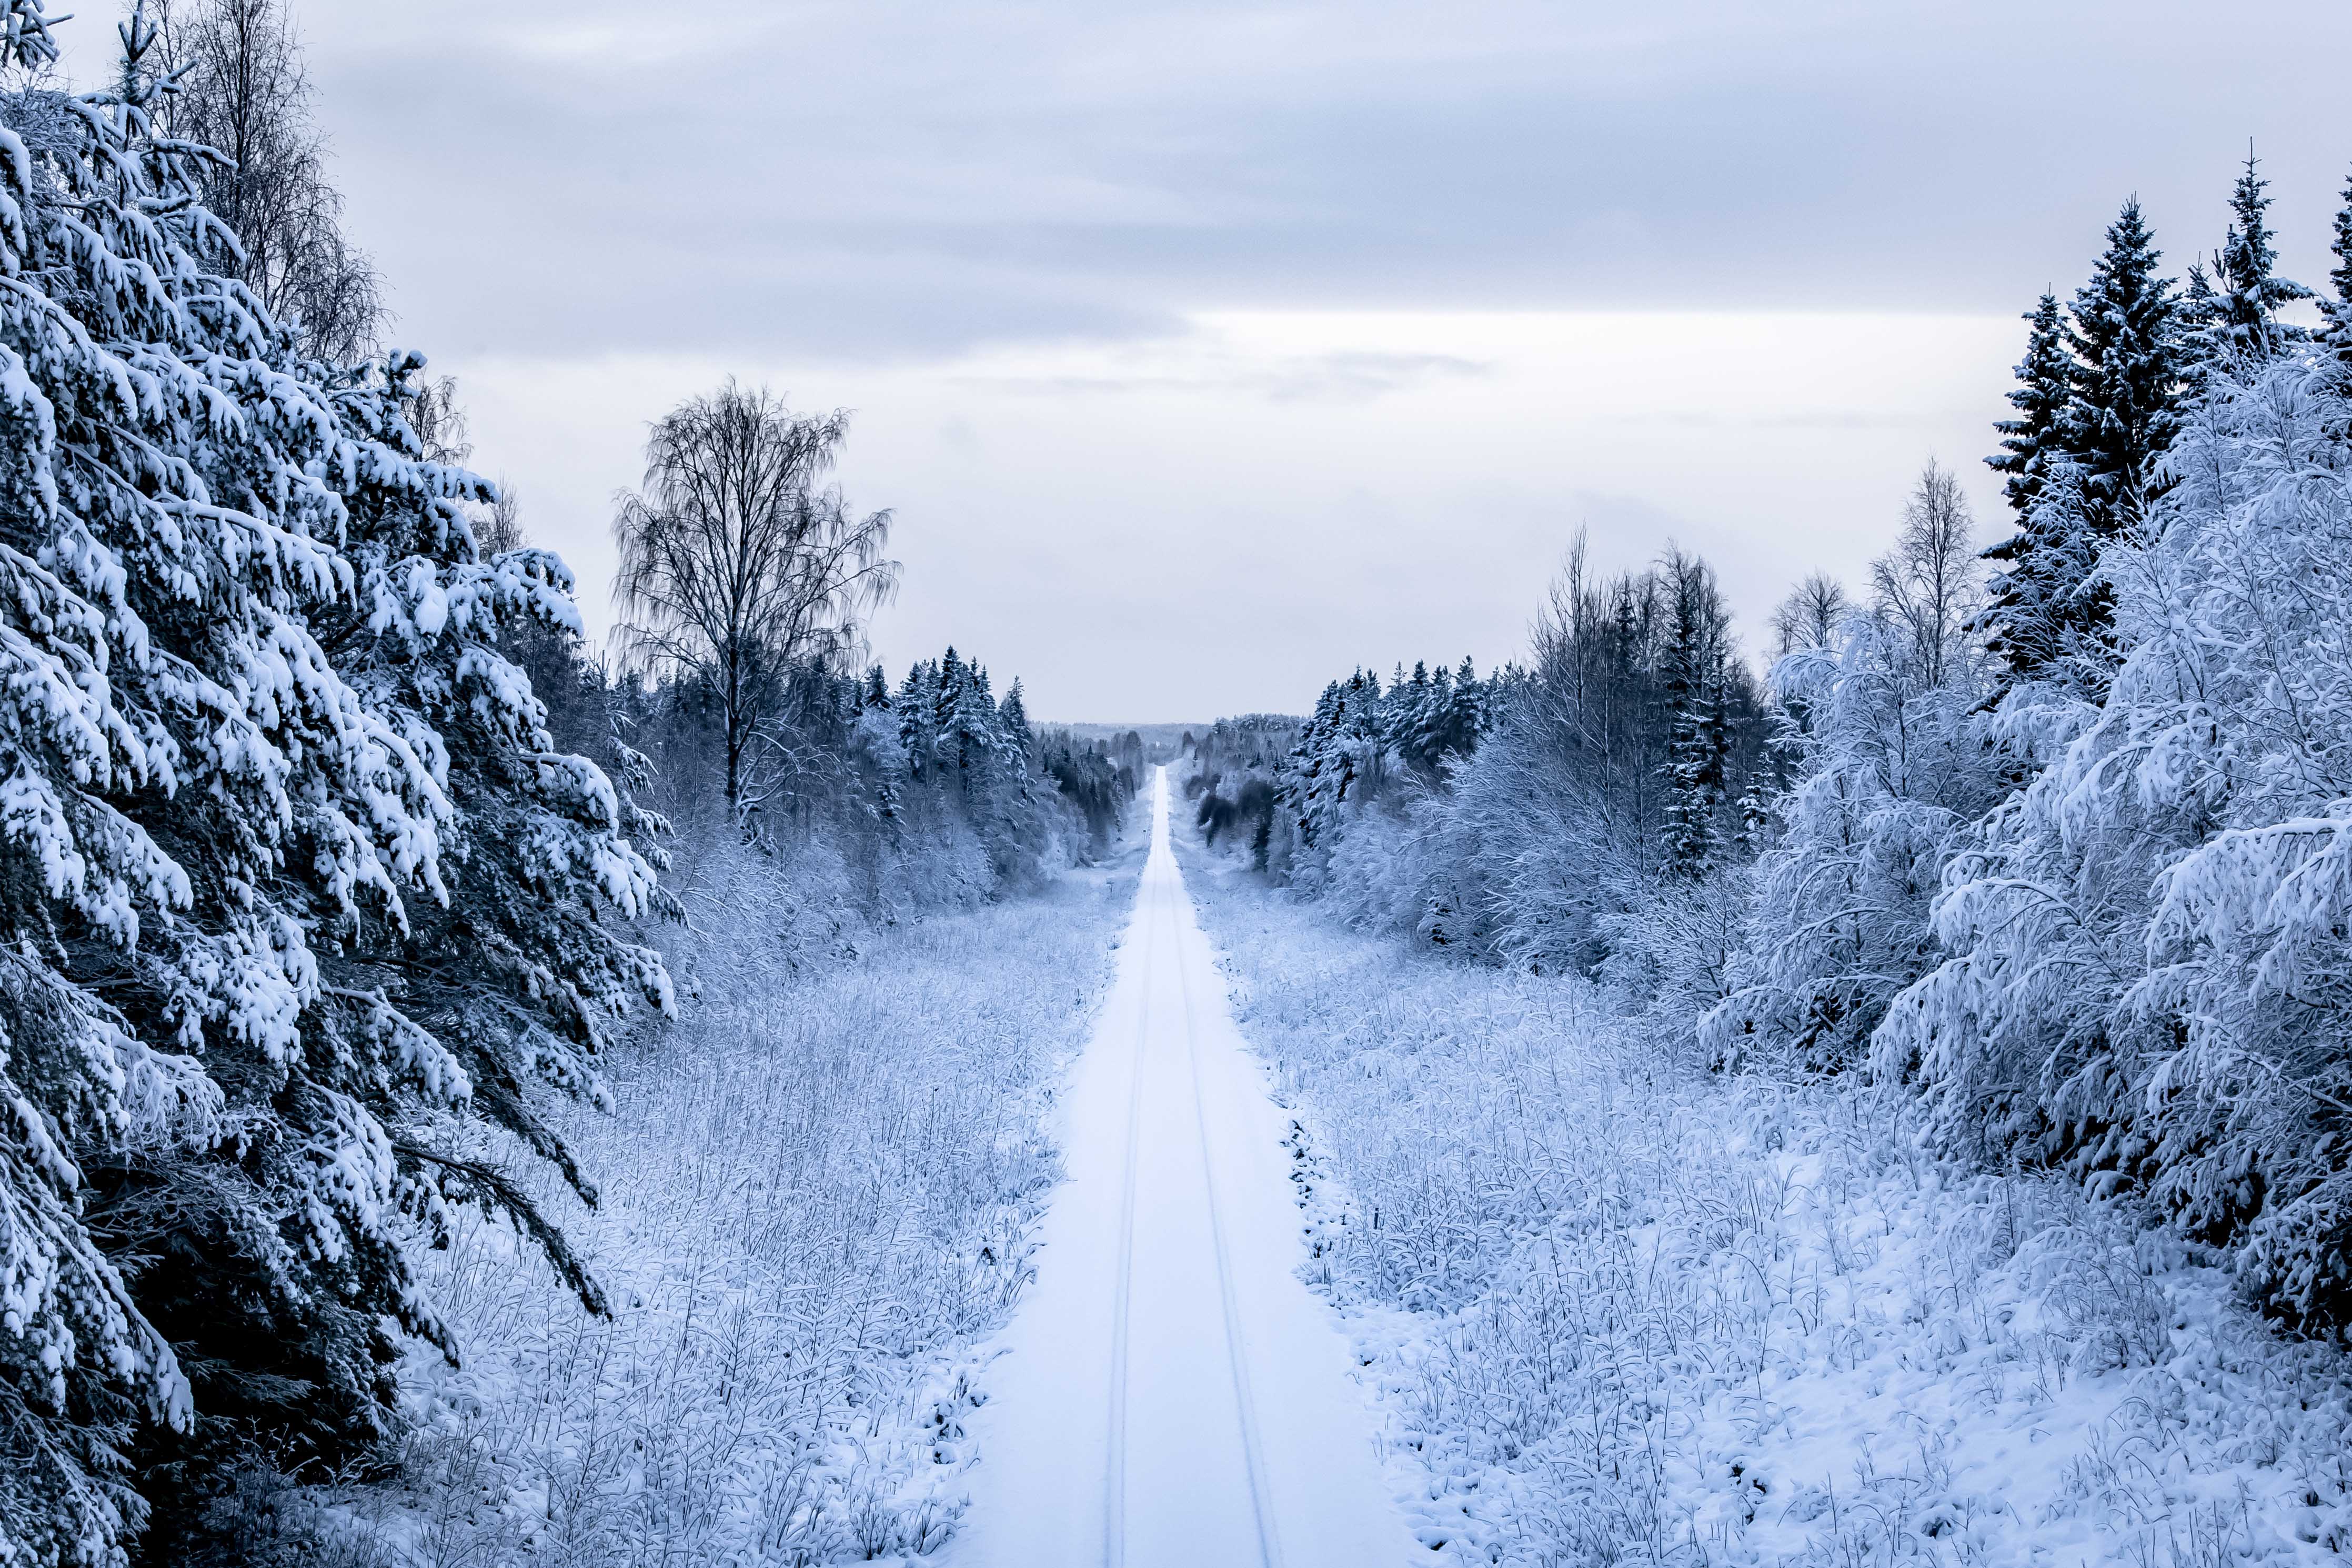 Snowy railway track